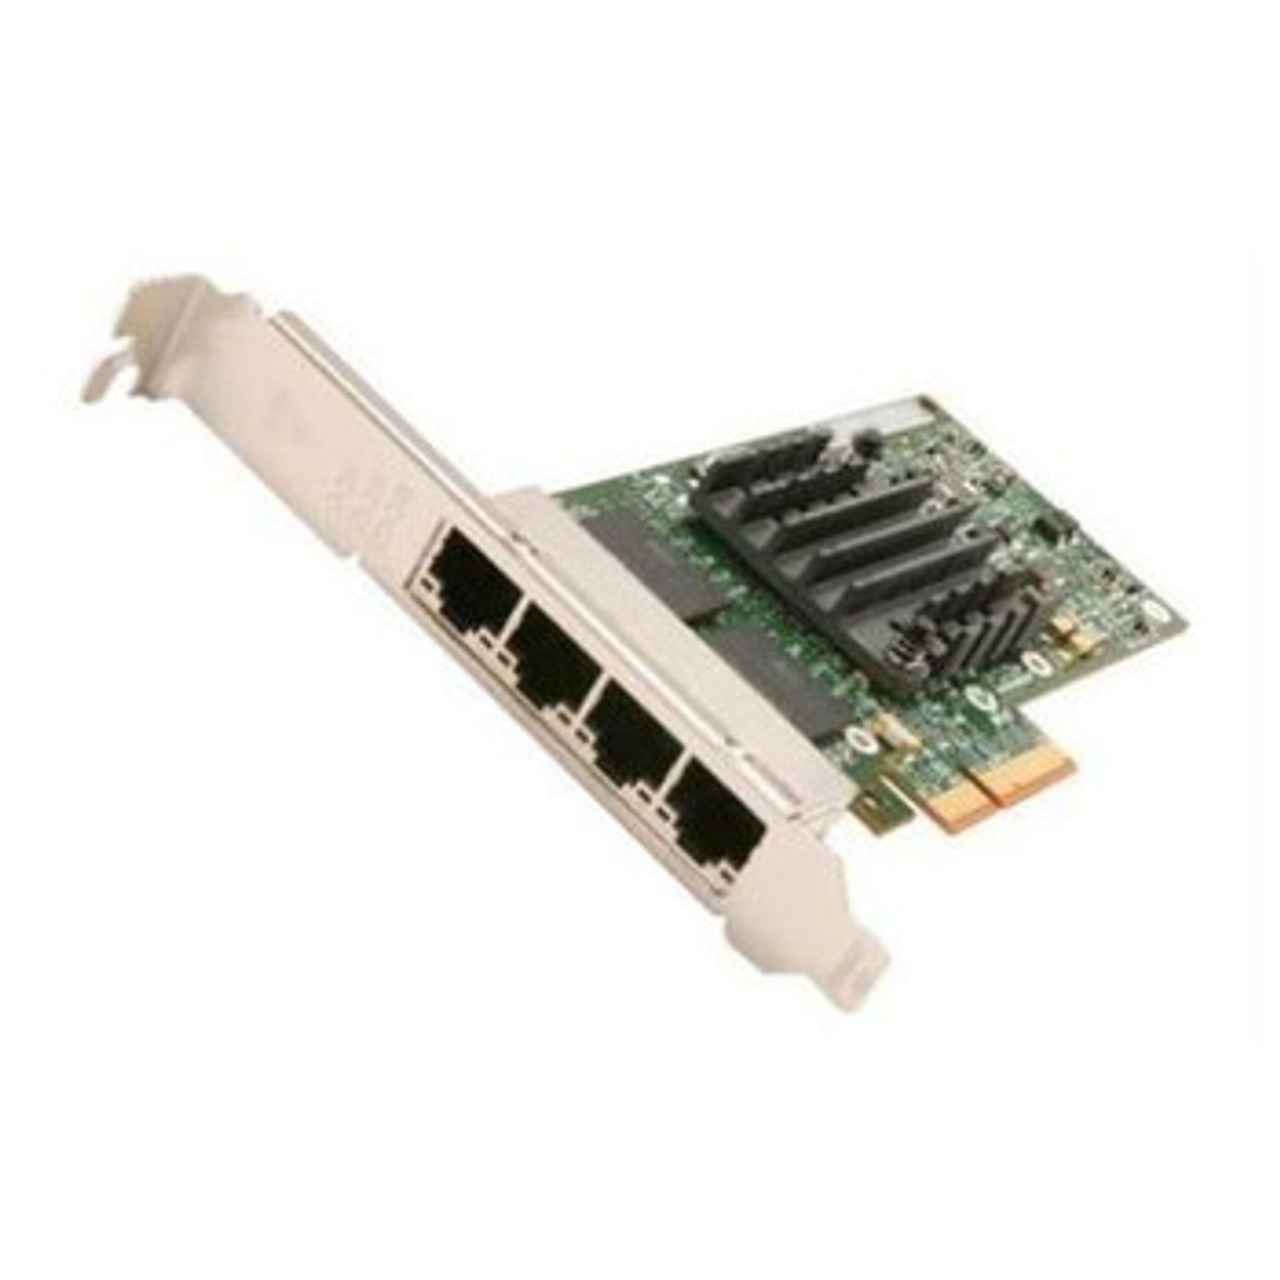 46M2243 | Ibm | Chelsio T440-Cr Quad-Ports Sfp+ 10Gbps Gigabit Ethernet Pci Express 2.0 Network Adapter